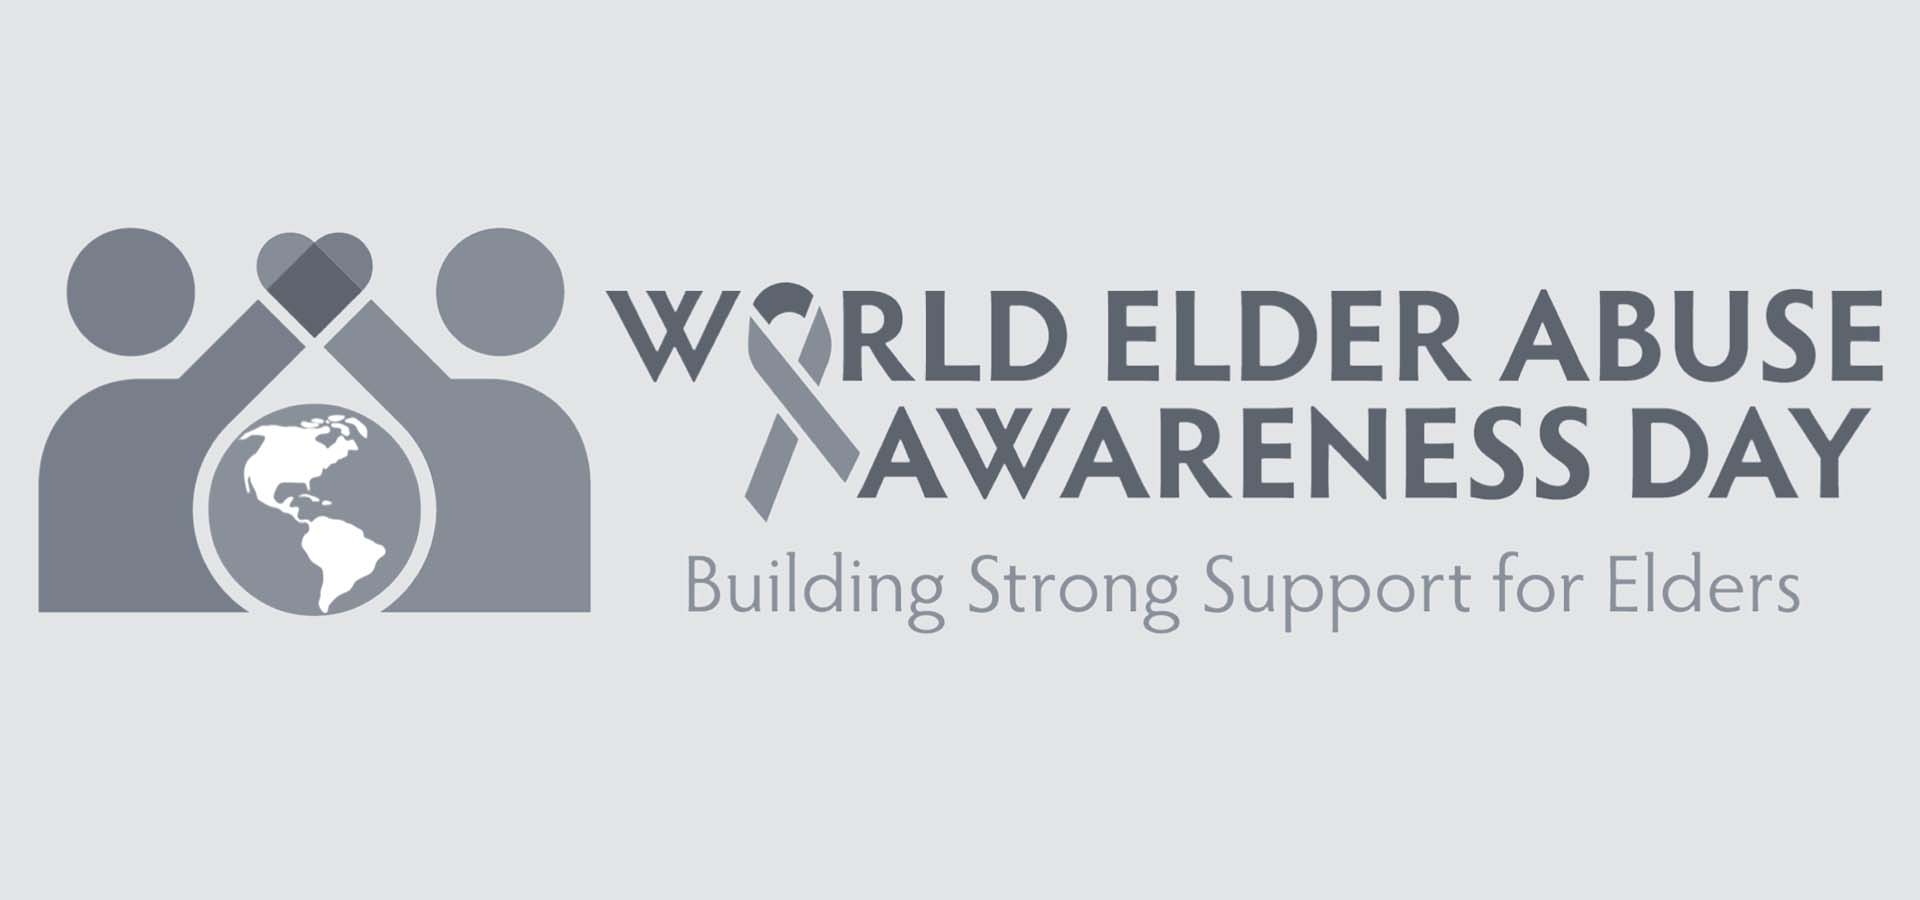 CONFERENCE - World Elder Abuse Awareness Day